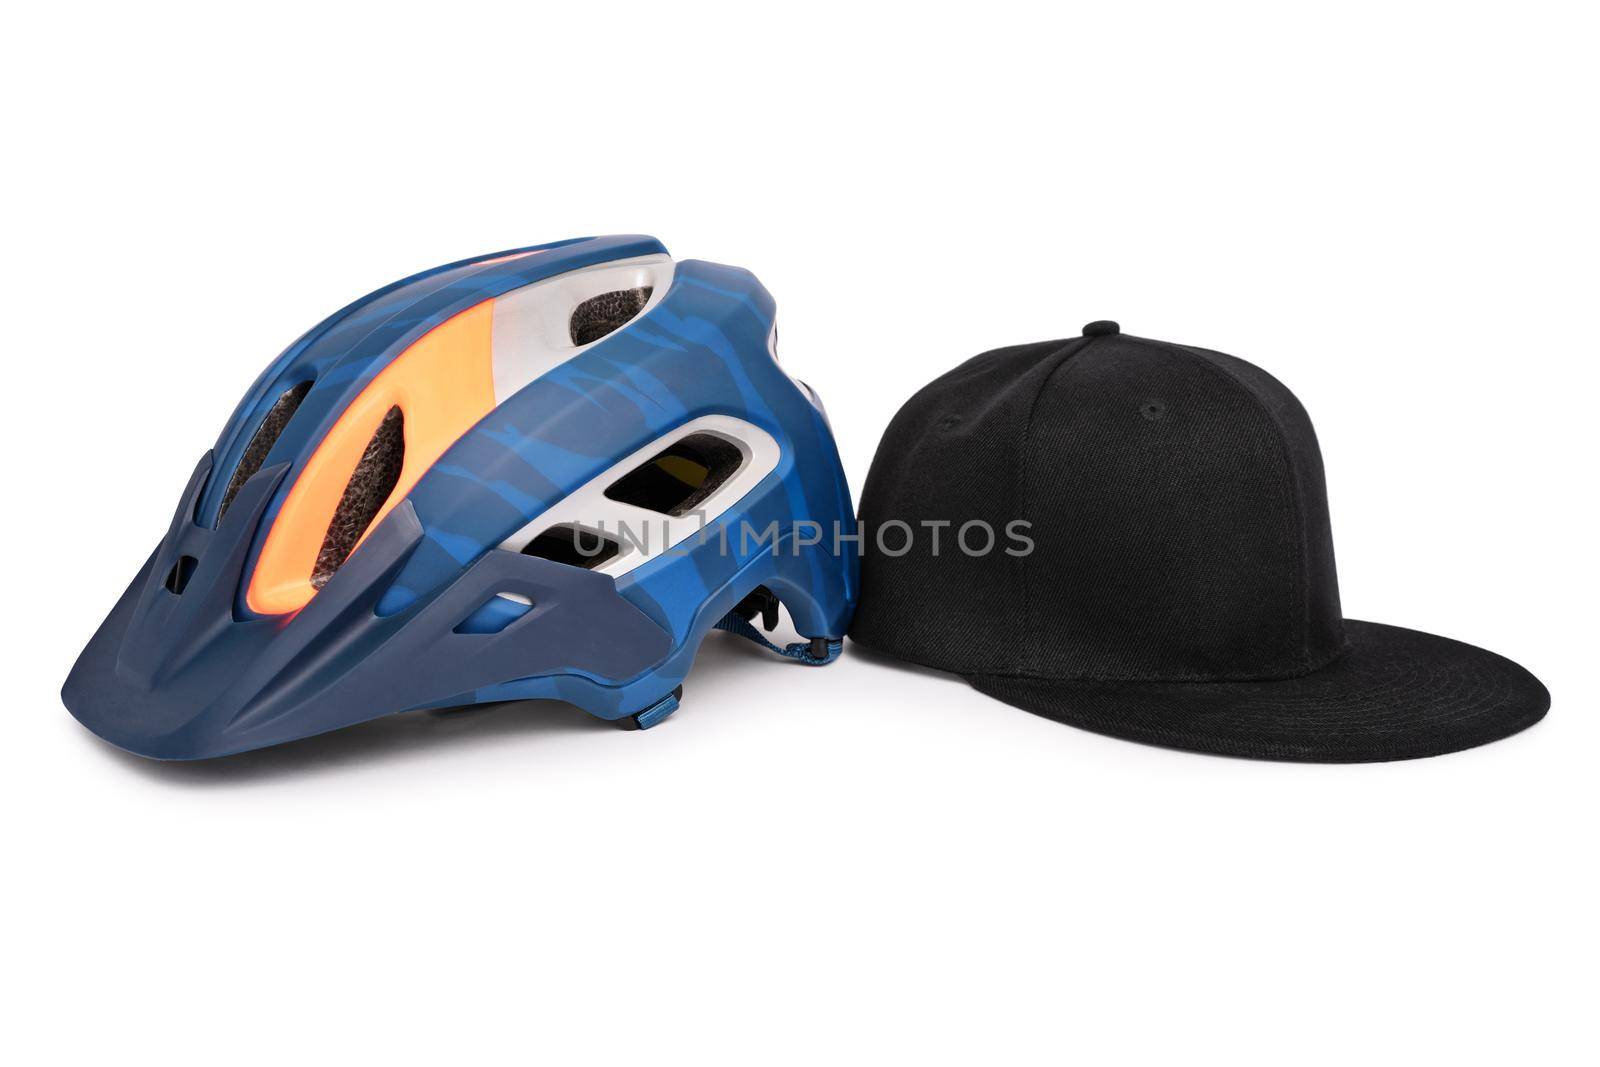 Bike helmet and a baseball snapback hat side by side by Mendelex